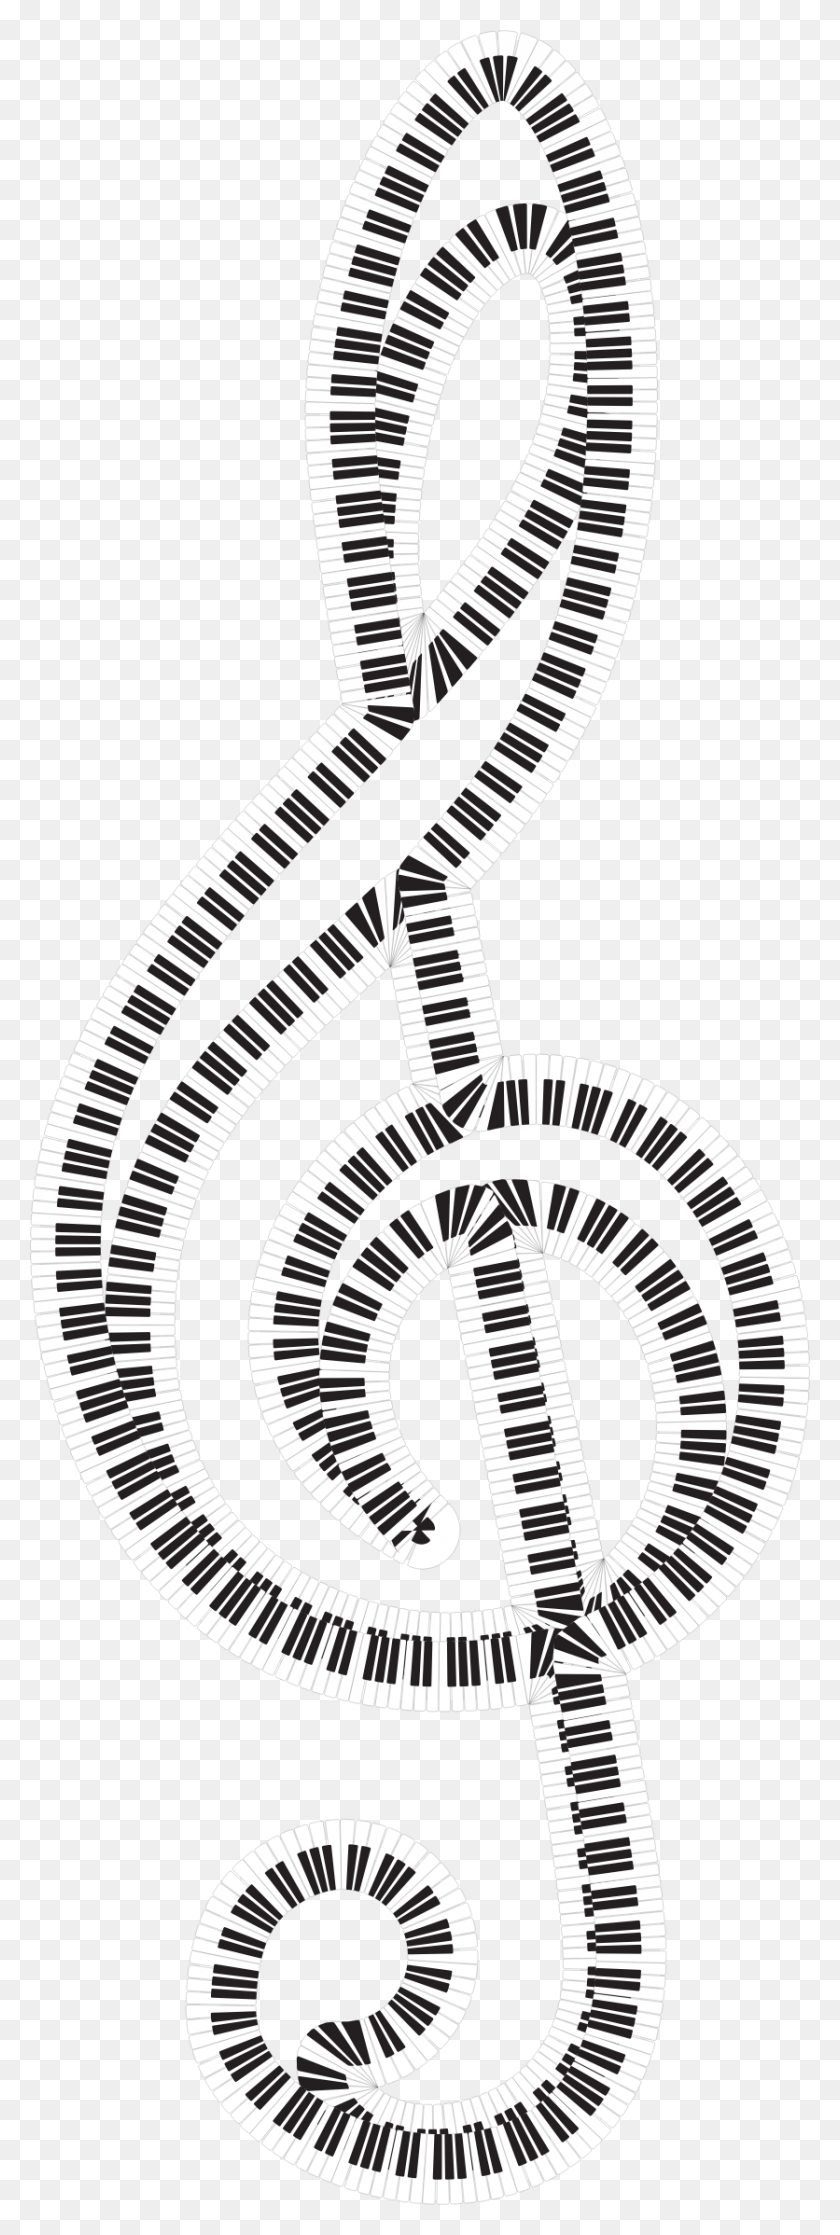 836x2332 This Free Icons Design Of Clef Piano Keys, Stencil, Herradura Hd Png